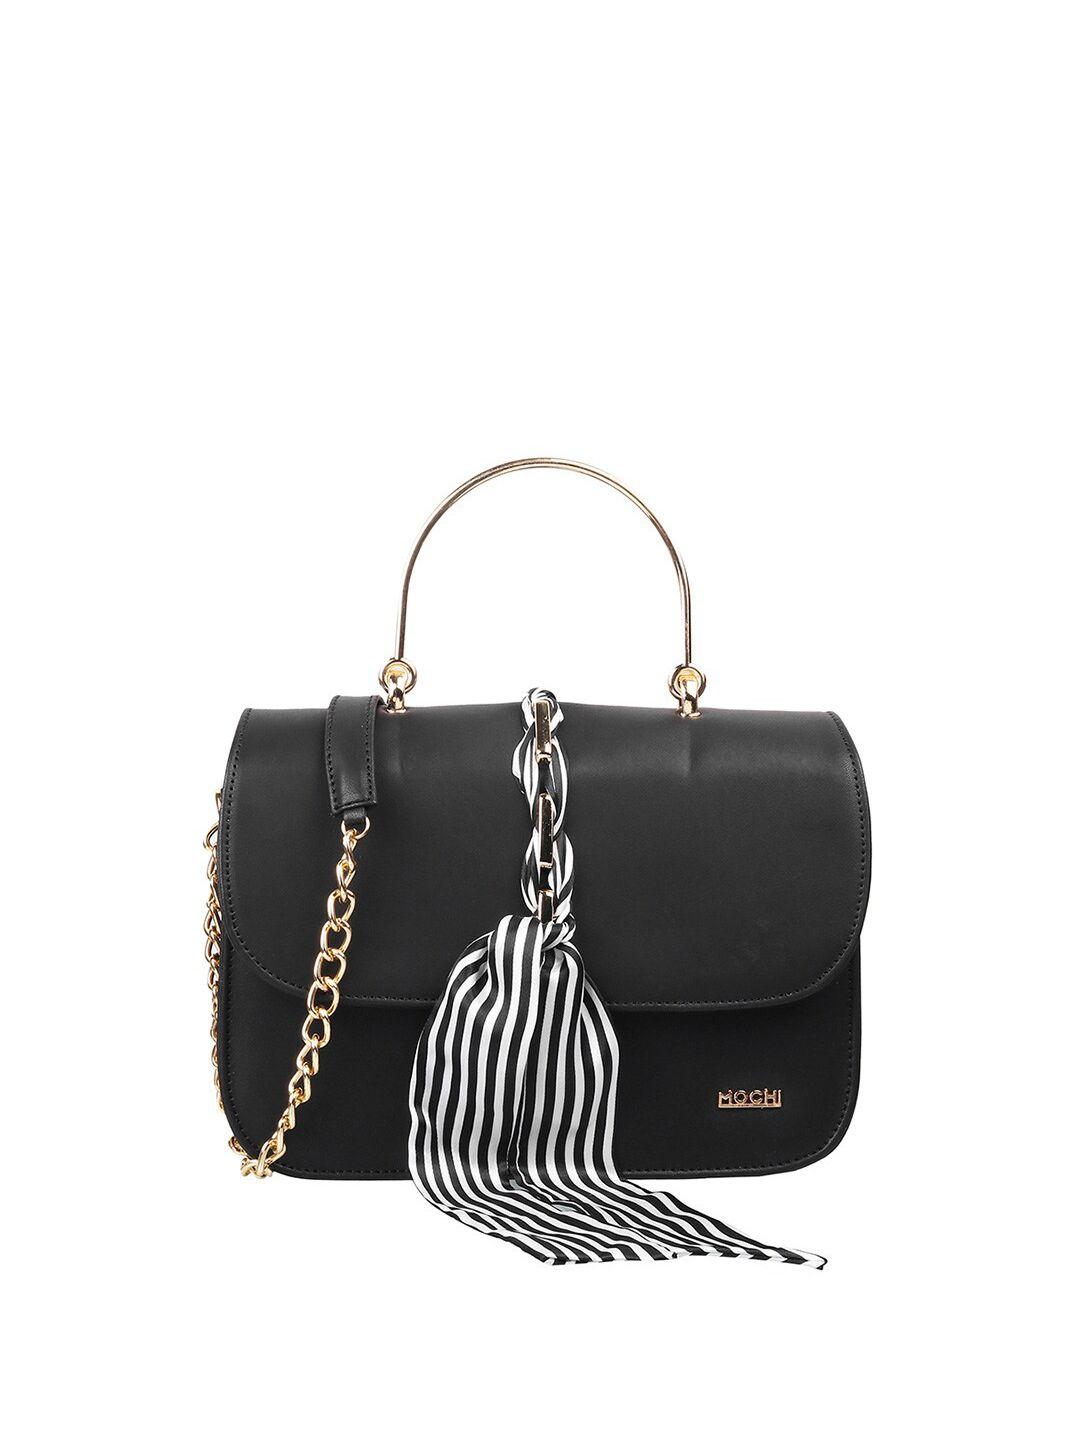 mochi black textured purse clutch